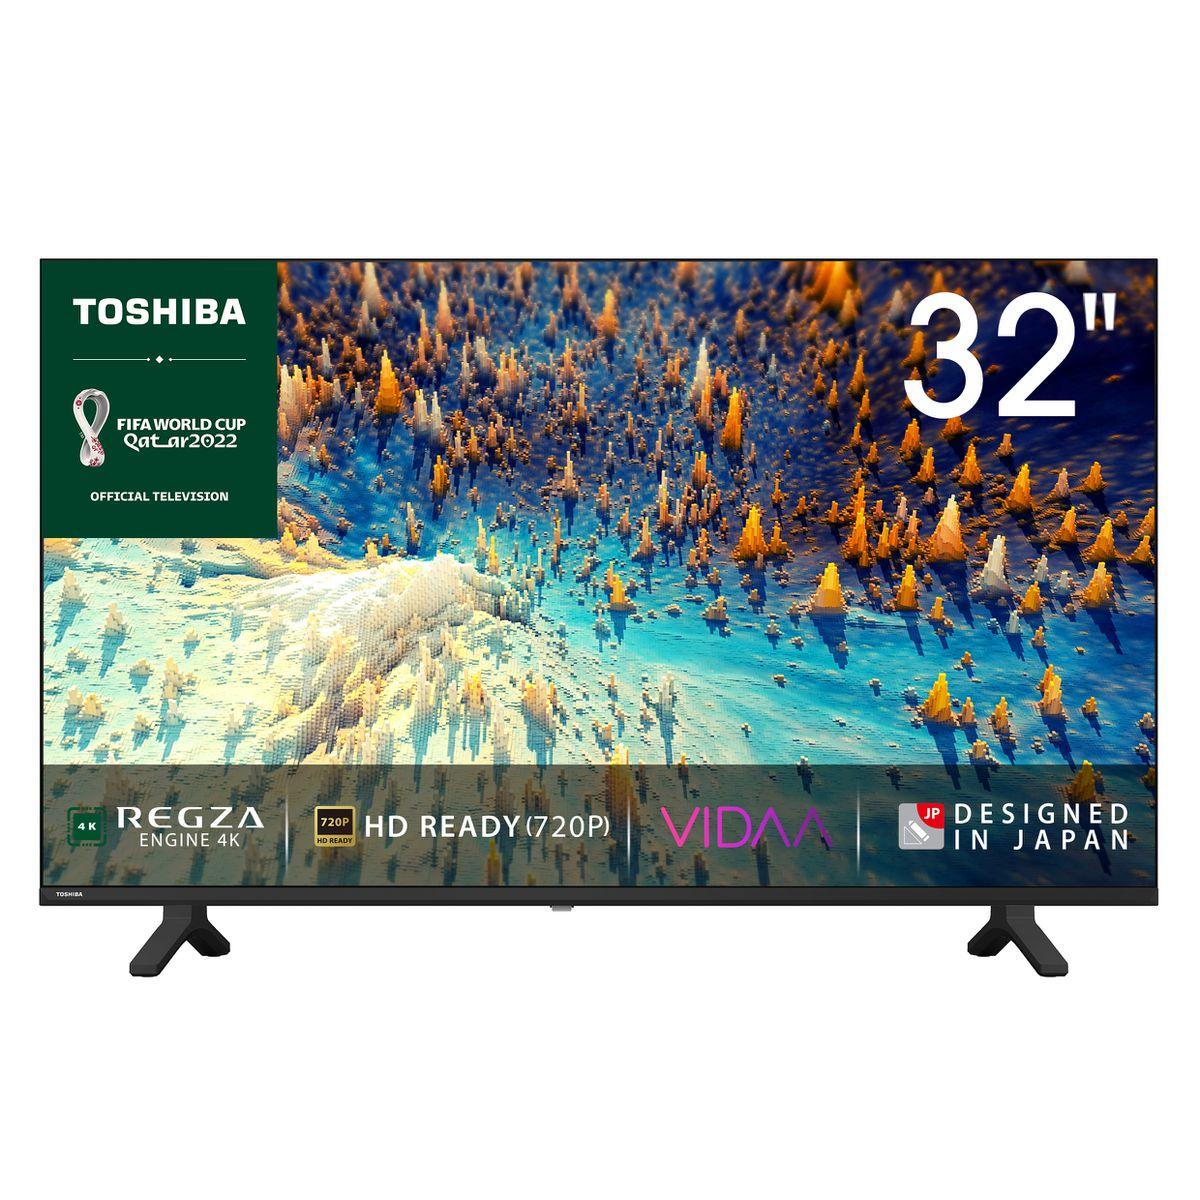 Toshiba 32" HD Smart LED TV